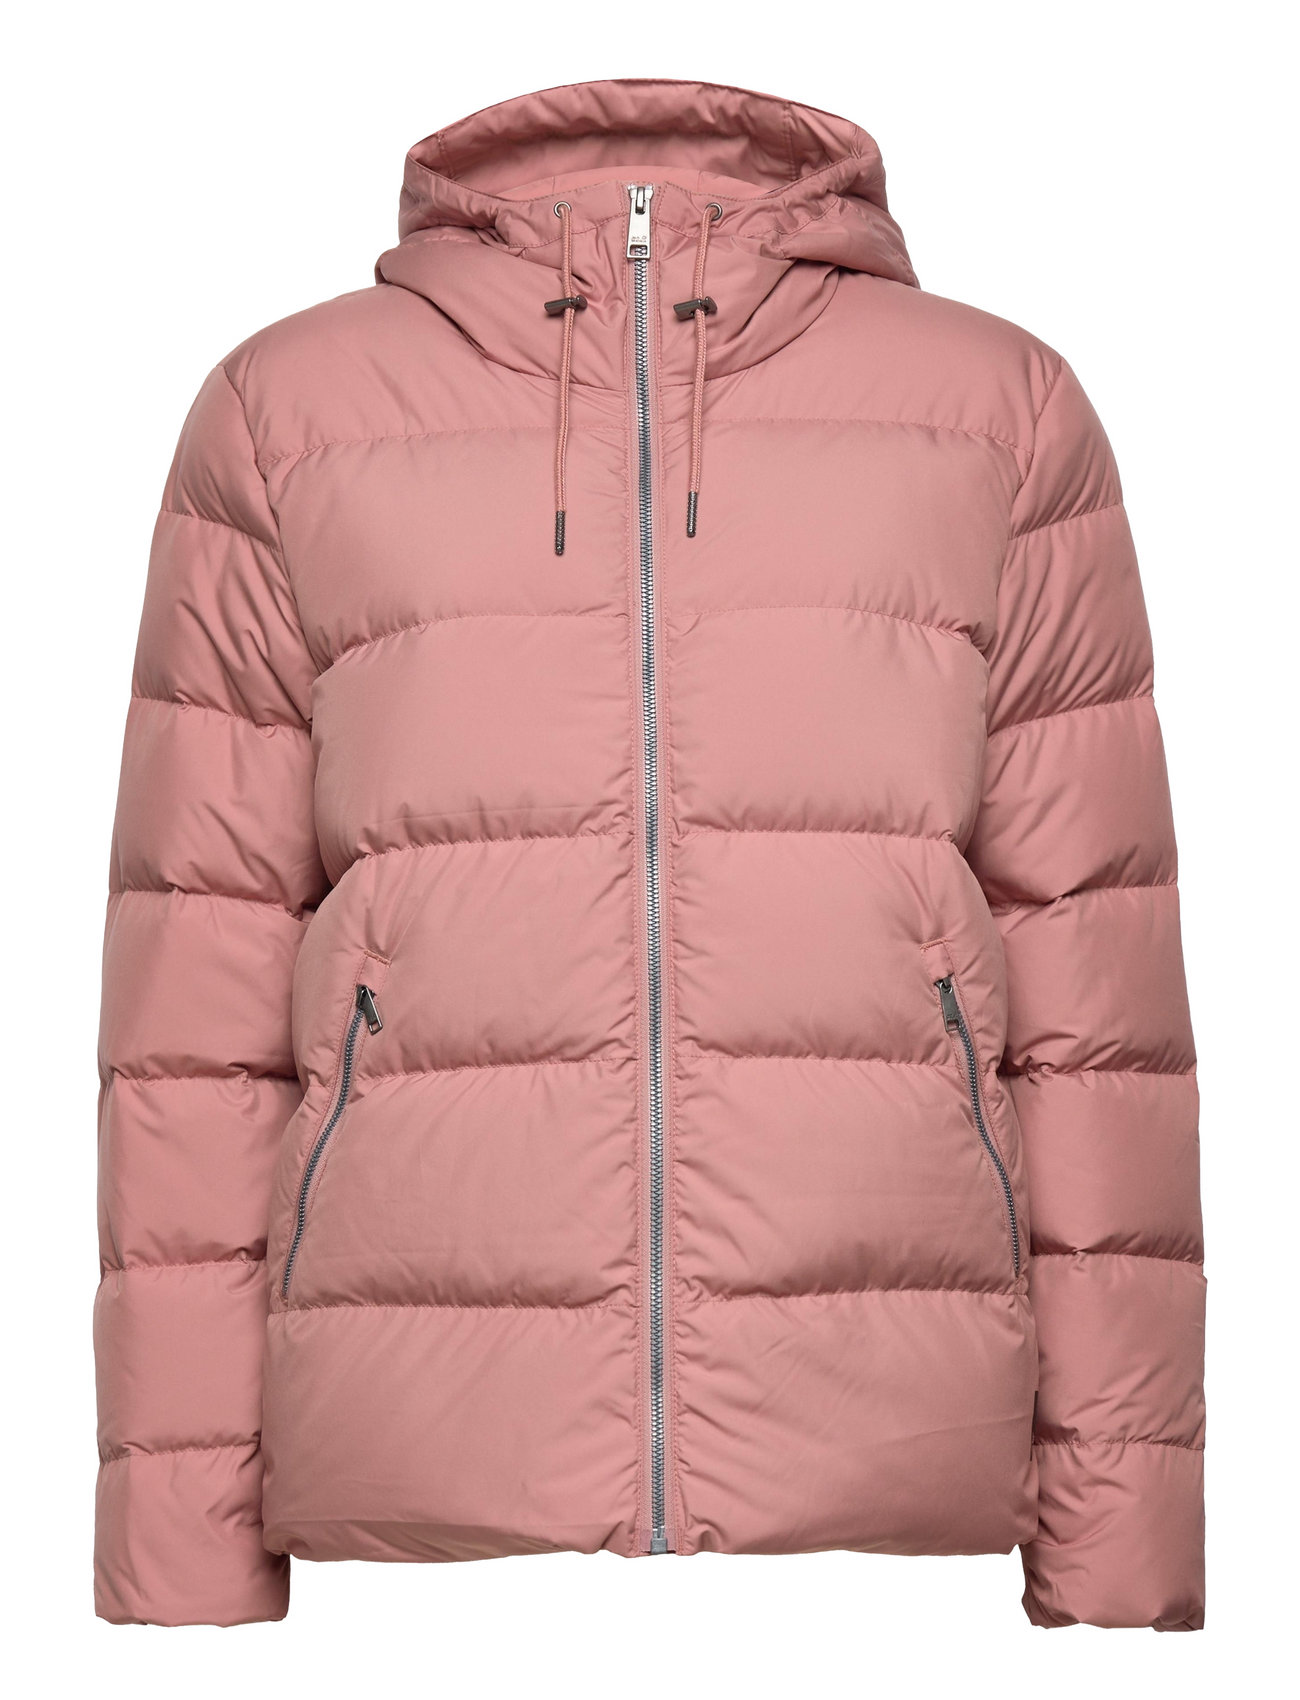 Jack Wolfskin shop jackets – at W Booztlet Frozen & Palace Jacket coats –